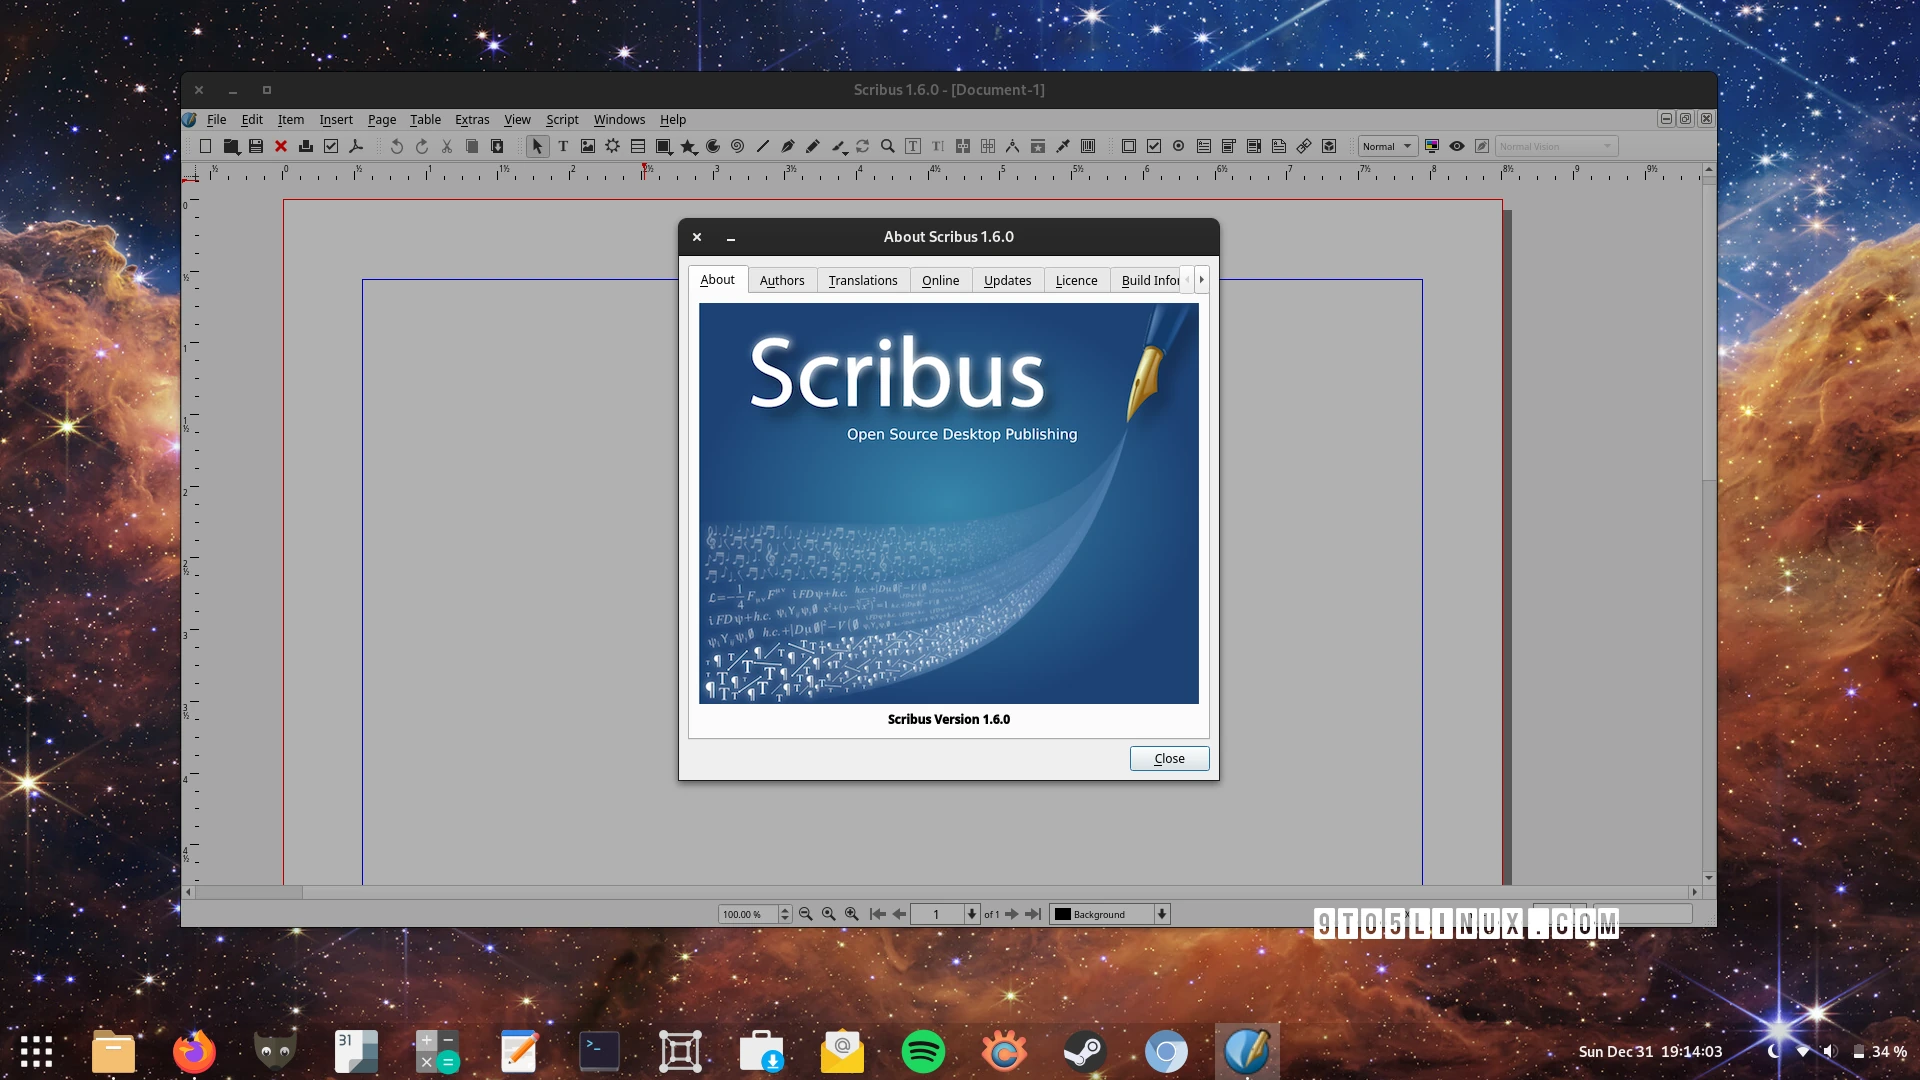 Scribus 1.6 Open-Source Desktop Publishing App Released as a Major Update